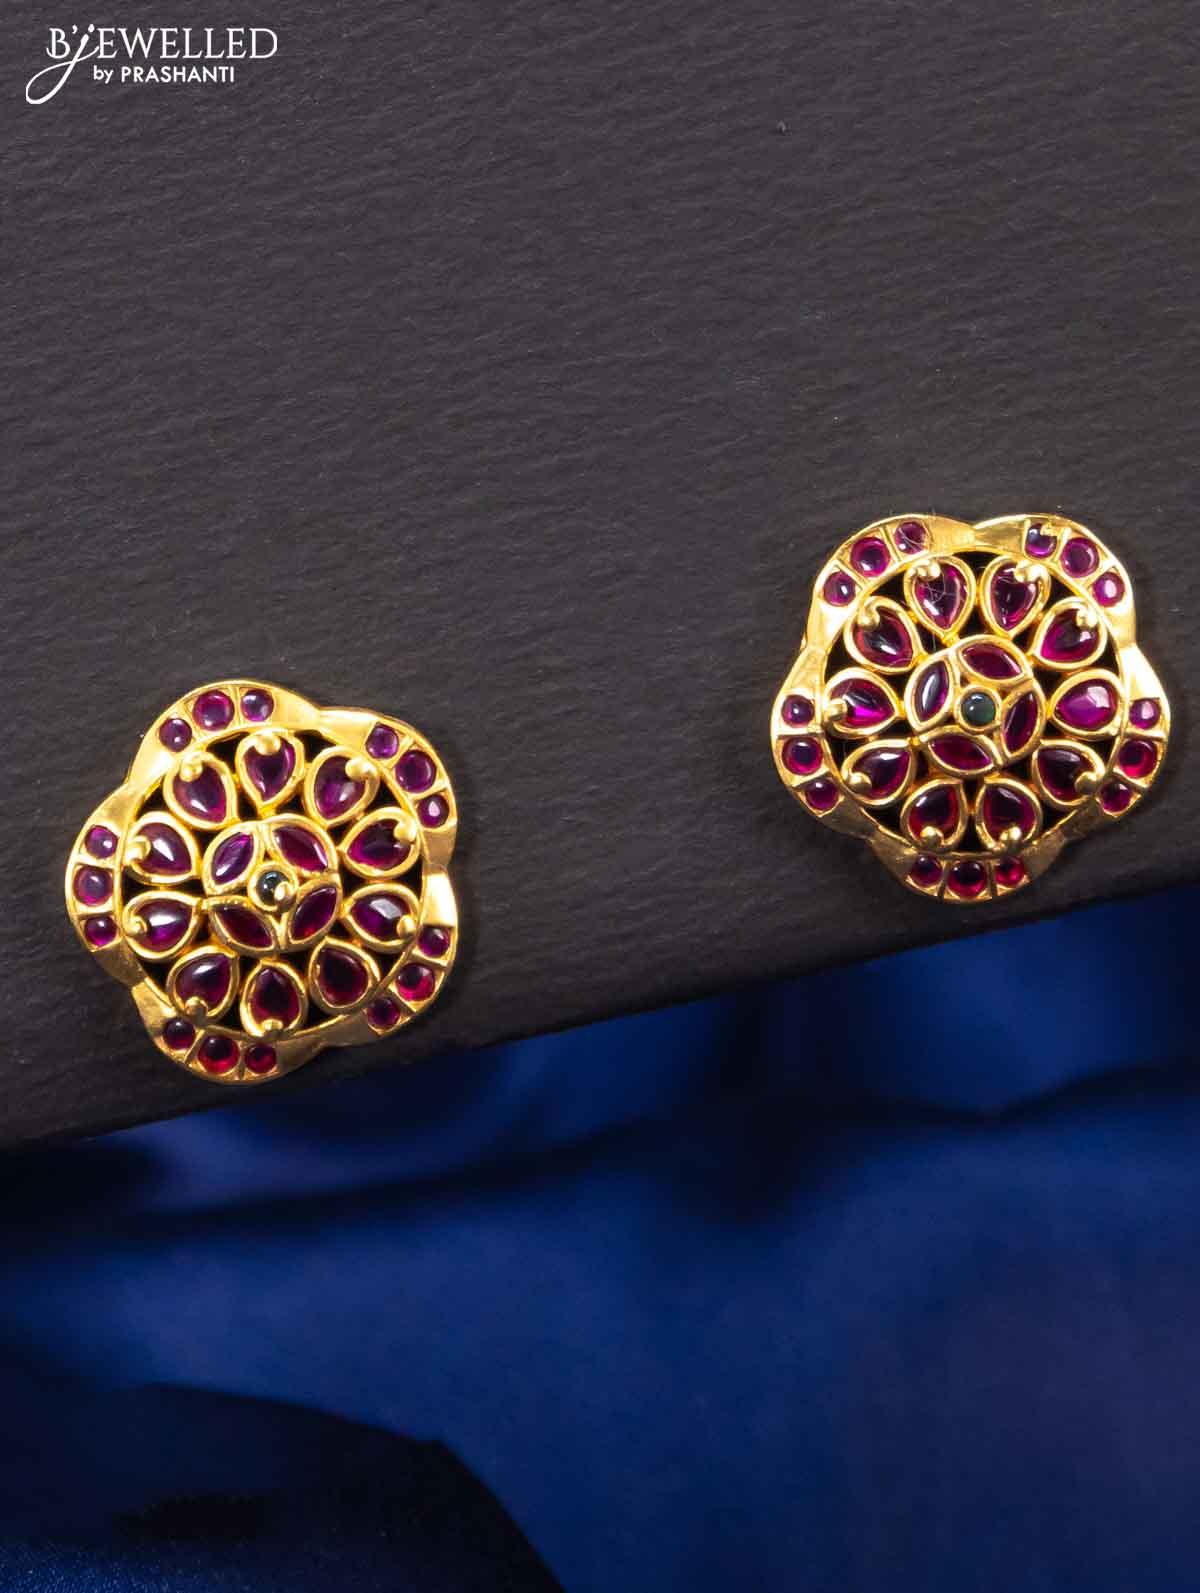 antique earrings with pink kemp stone prashanti sarees 1 28110952169670